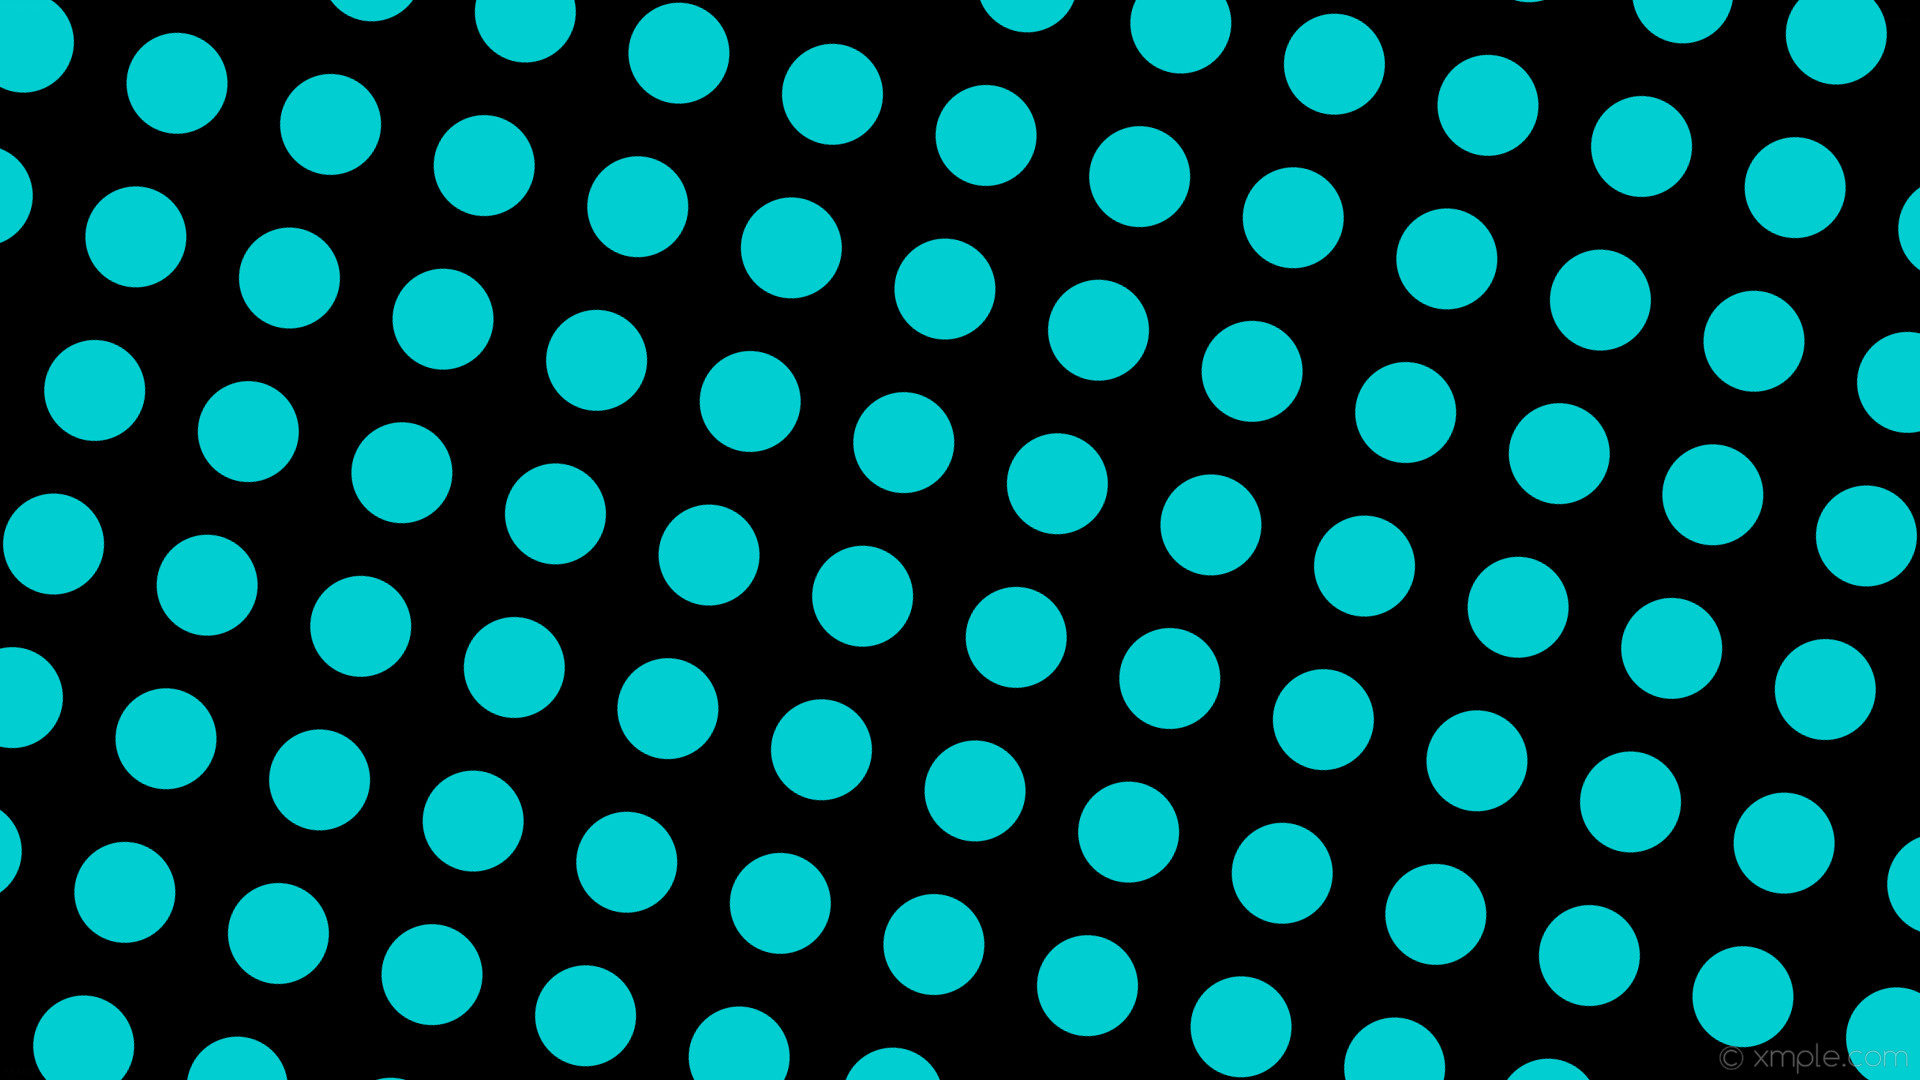 1920x1080 wallpaper dots blue spots polka black dark turquoise #000000 #00ced1 165Â°  101px 159px